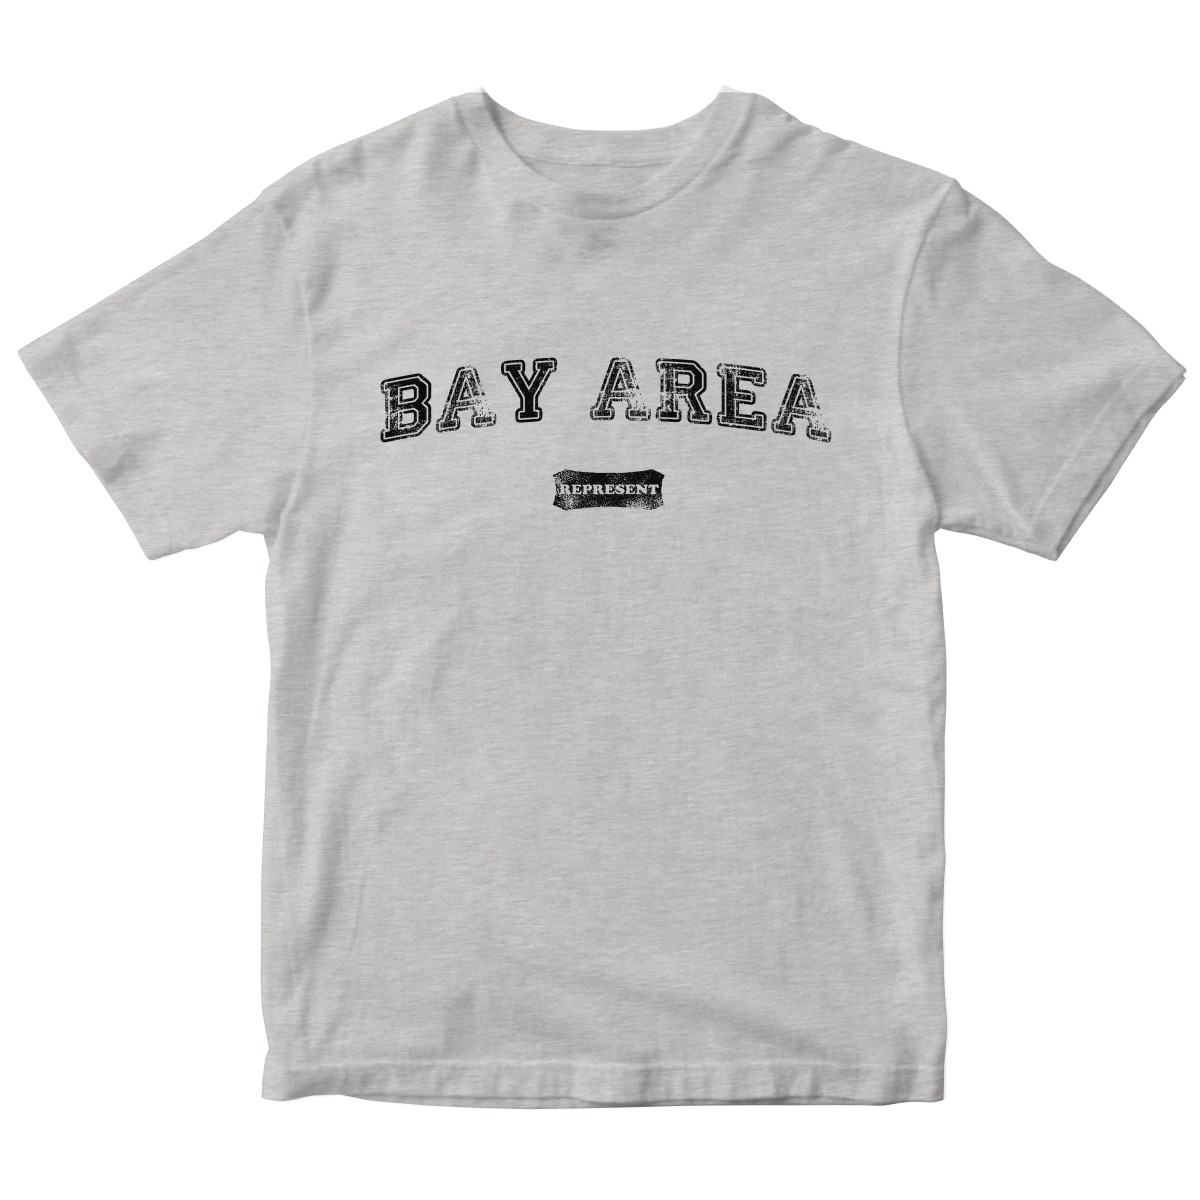 Bay Area Represent Toddler T-shirt | Gray